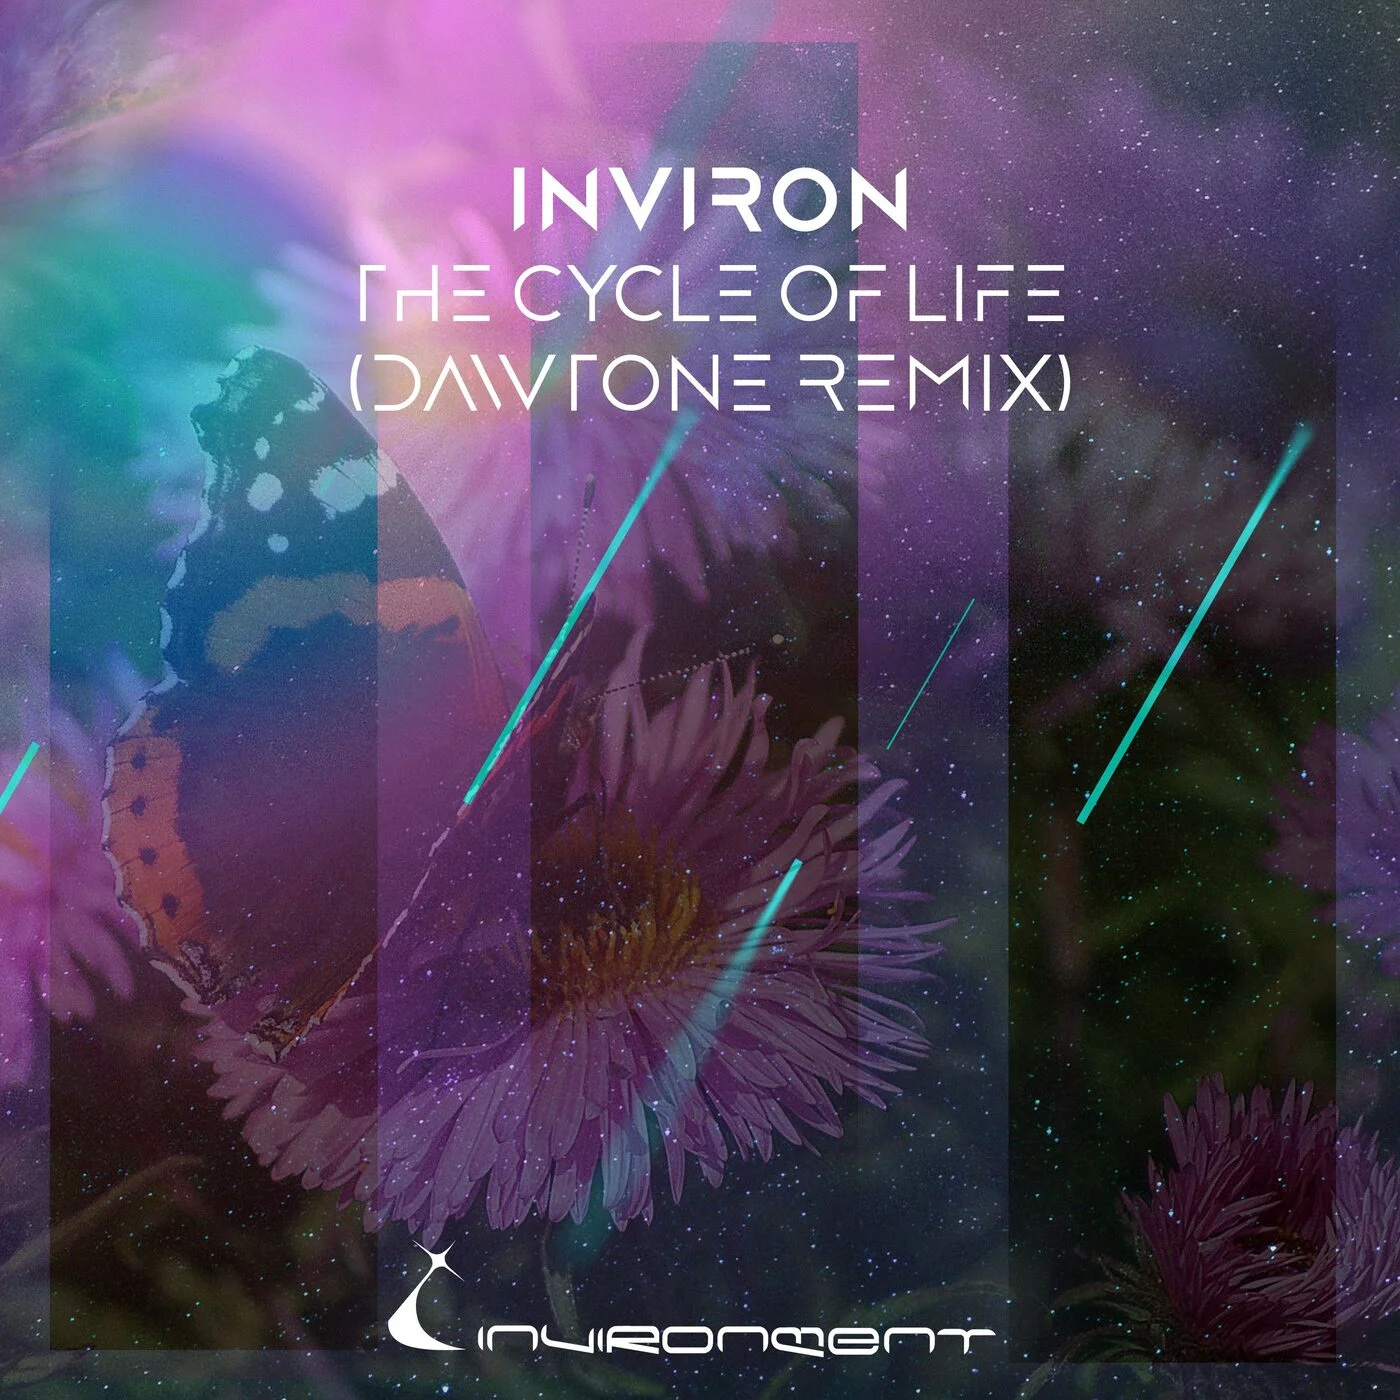 Inviron - The Cycle Of Life (DaWTone Remix)